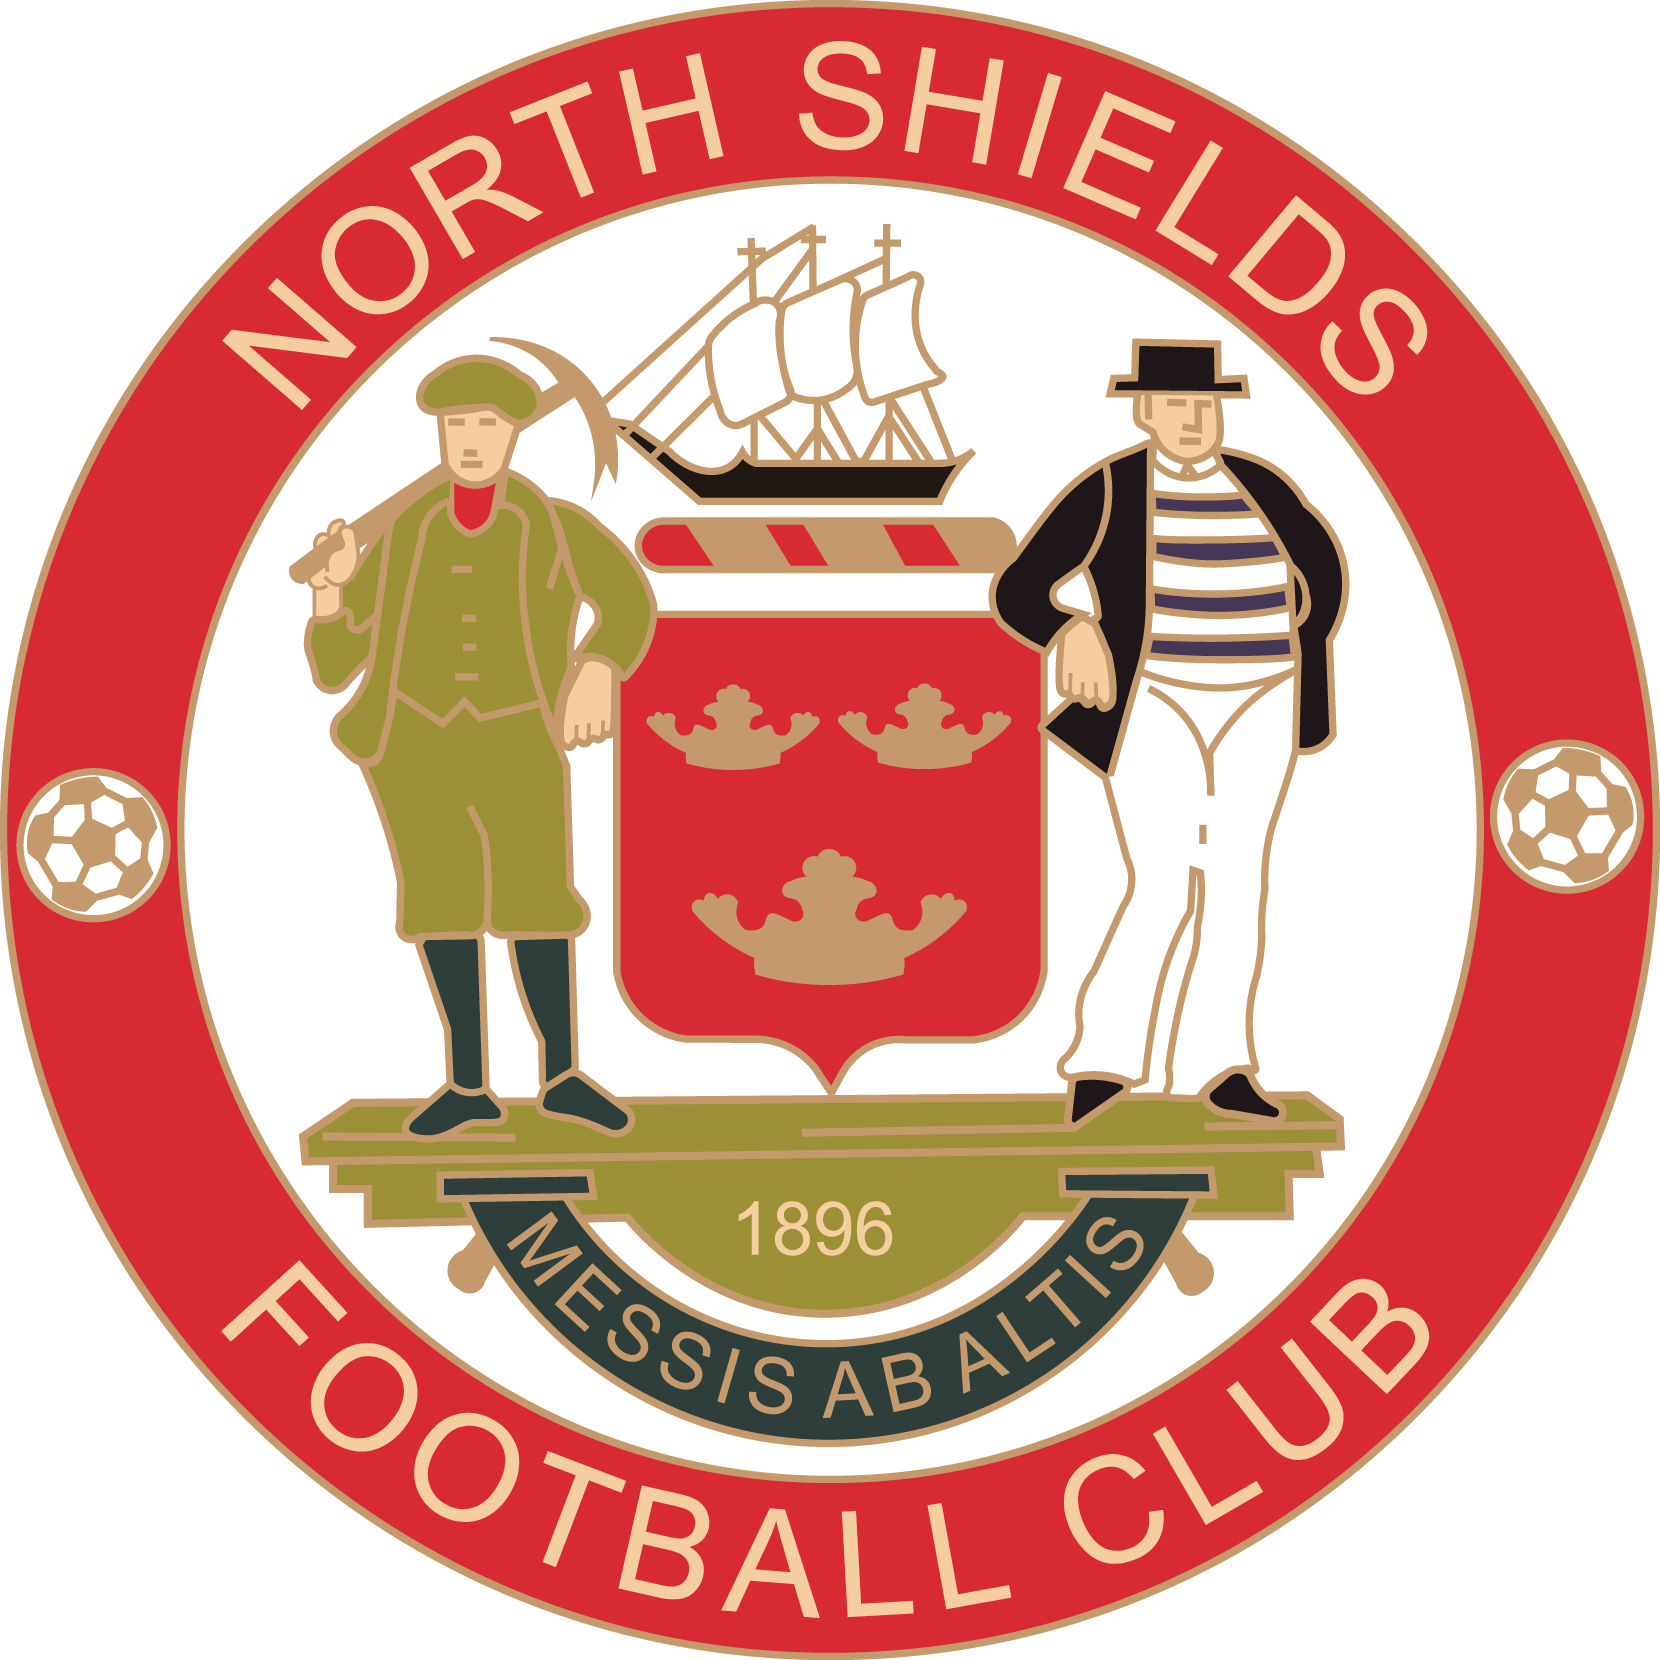 North Shields Football Club